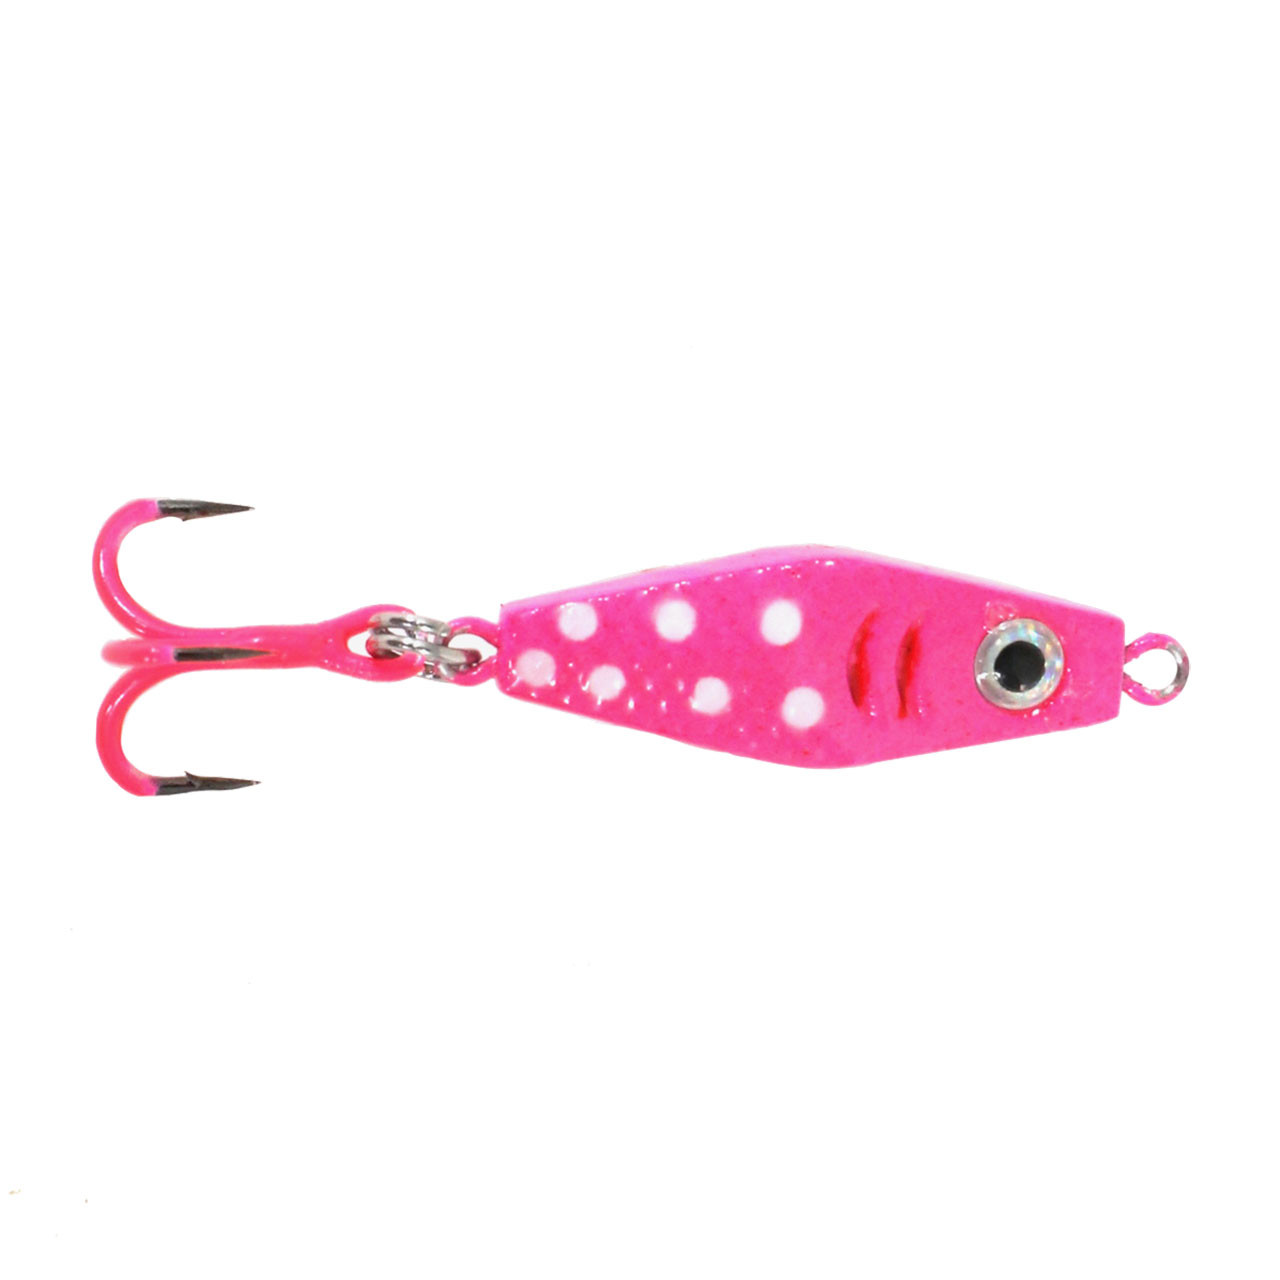 Clam Rattlin' PT Spoon - Pink Wonderbread Glow - 1/4 oz.